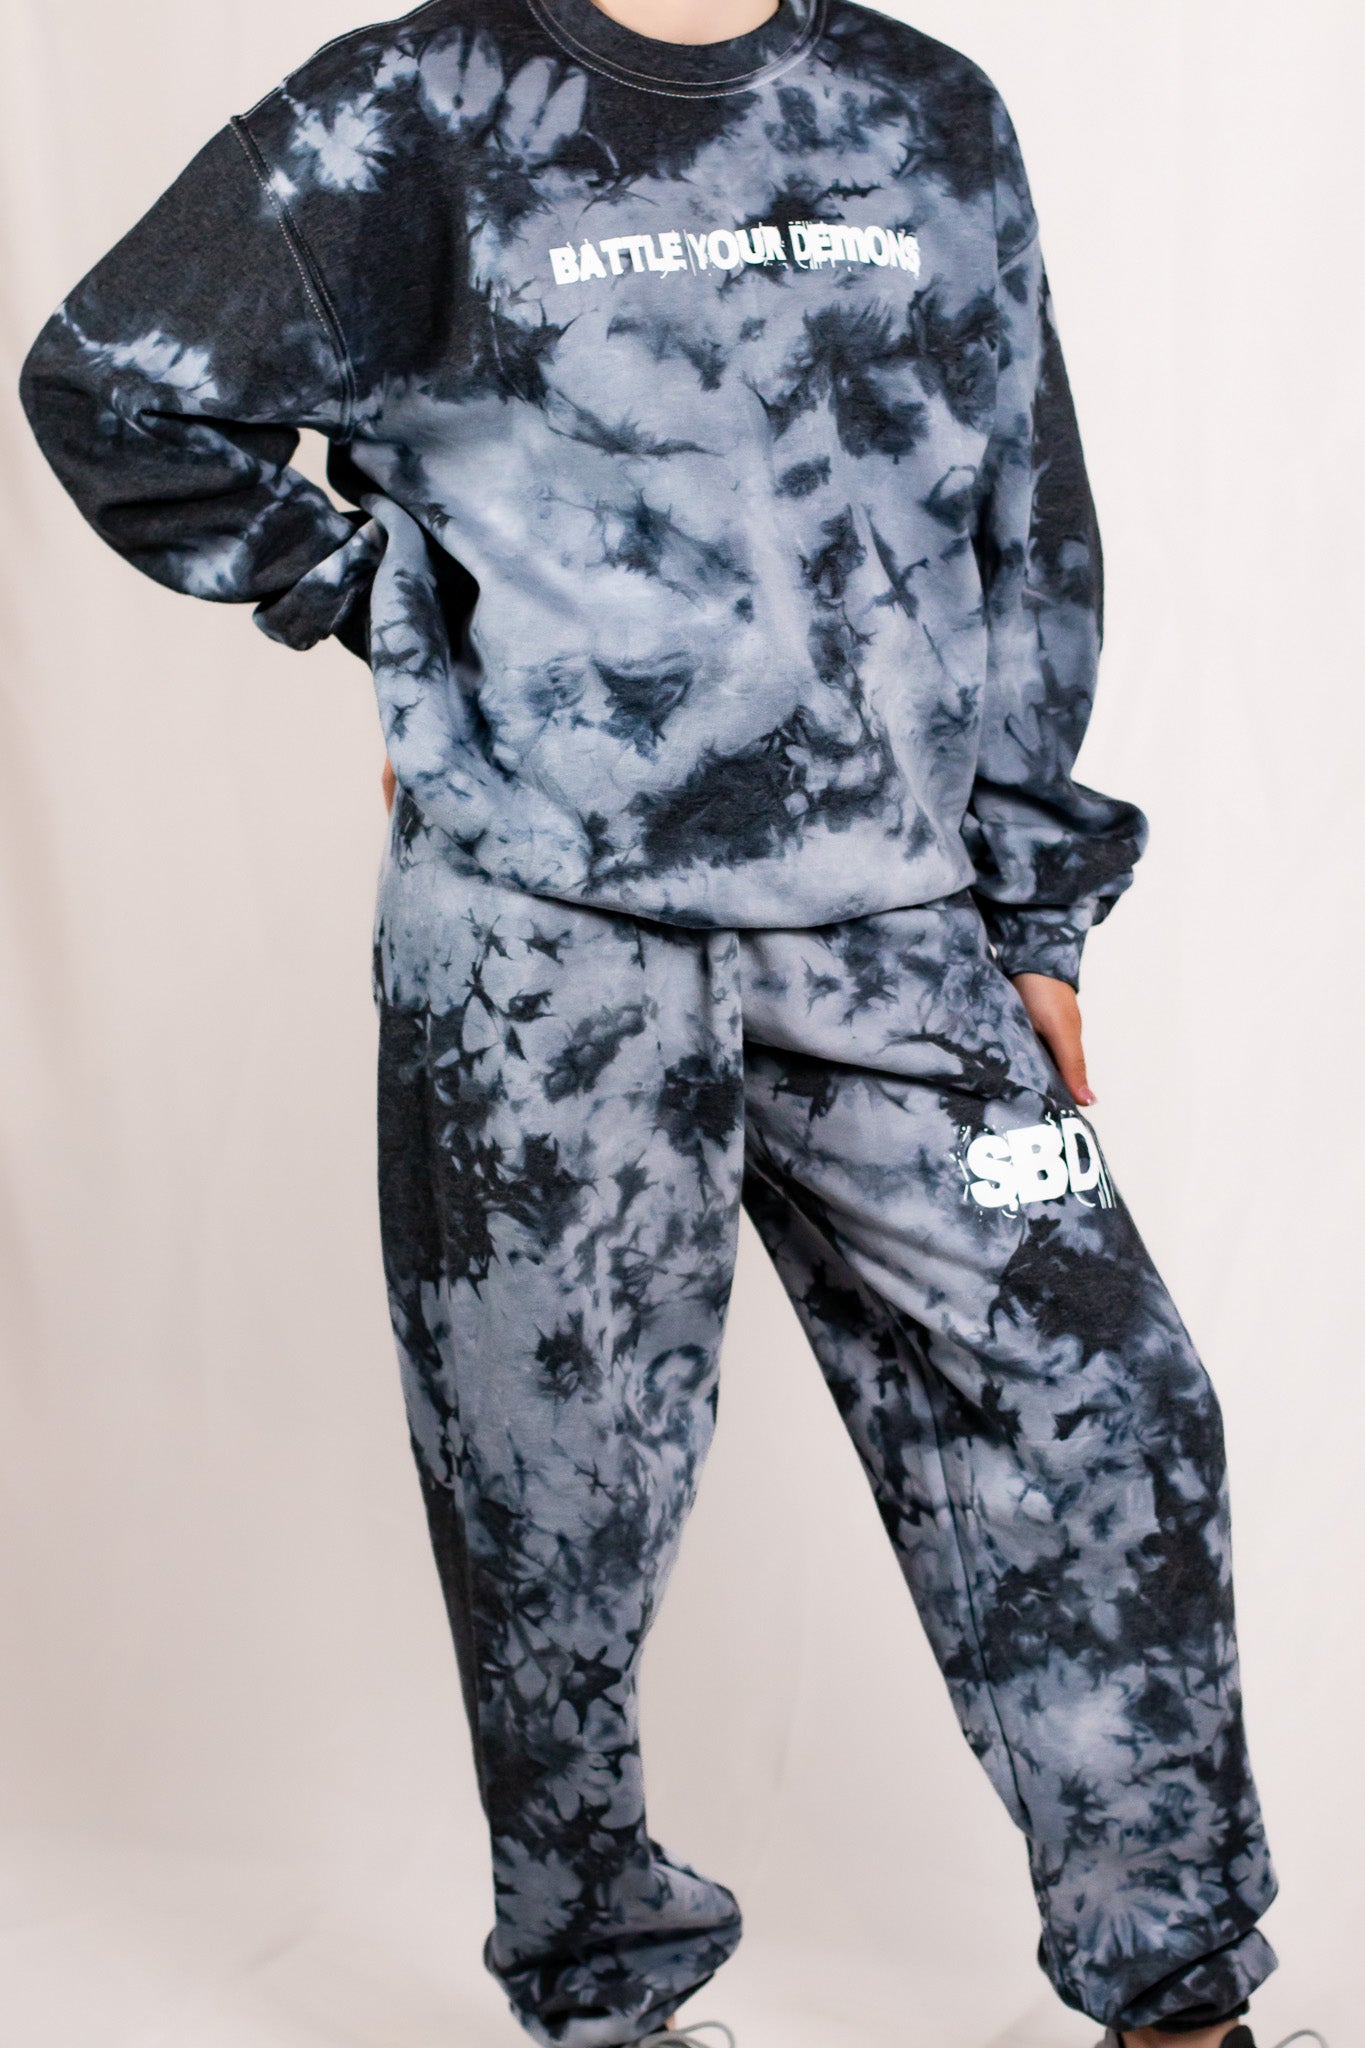 Unisex Black Crystal Tie Dye Crewneck Sweatshirt (Matching Set)